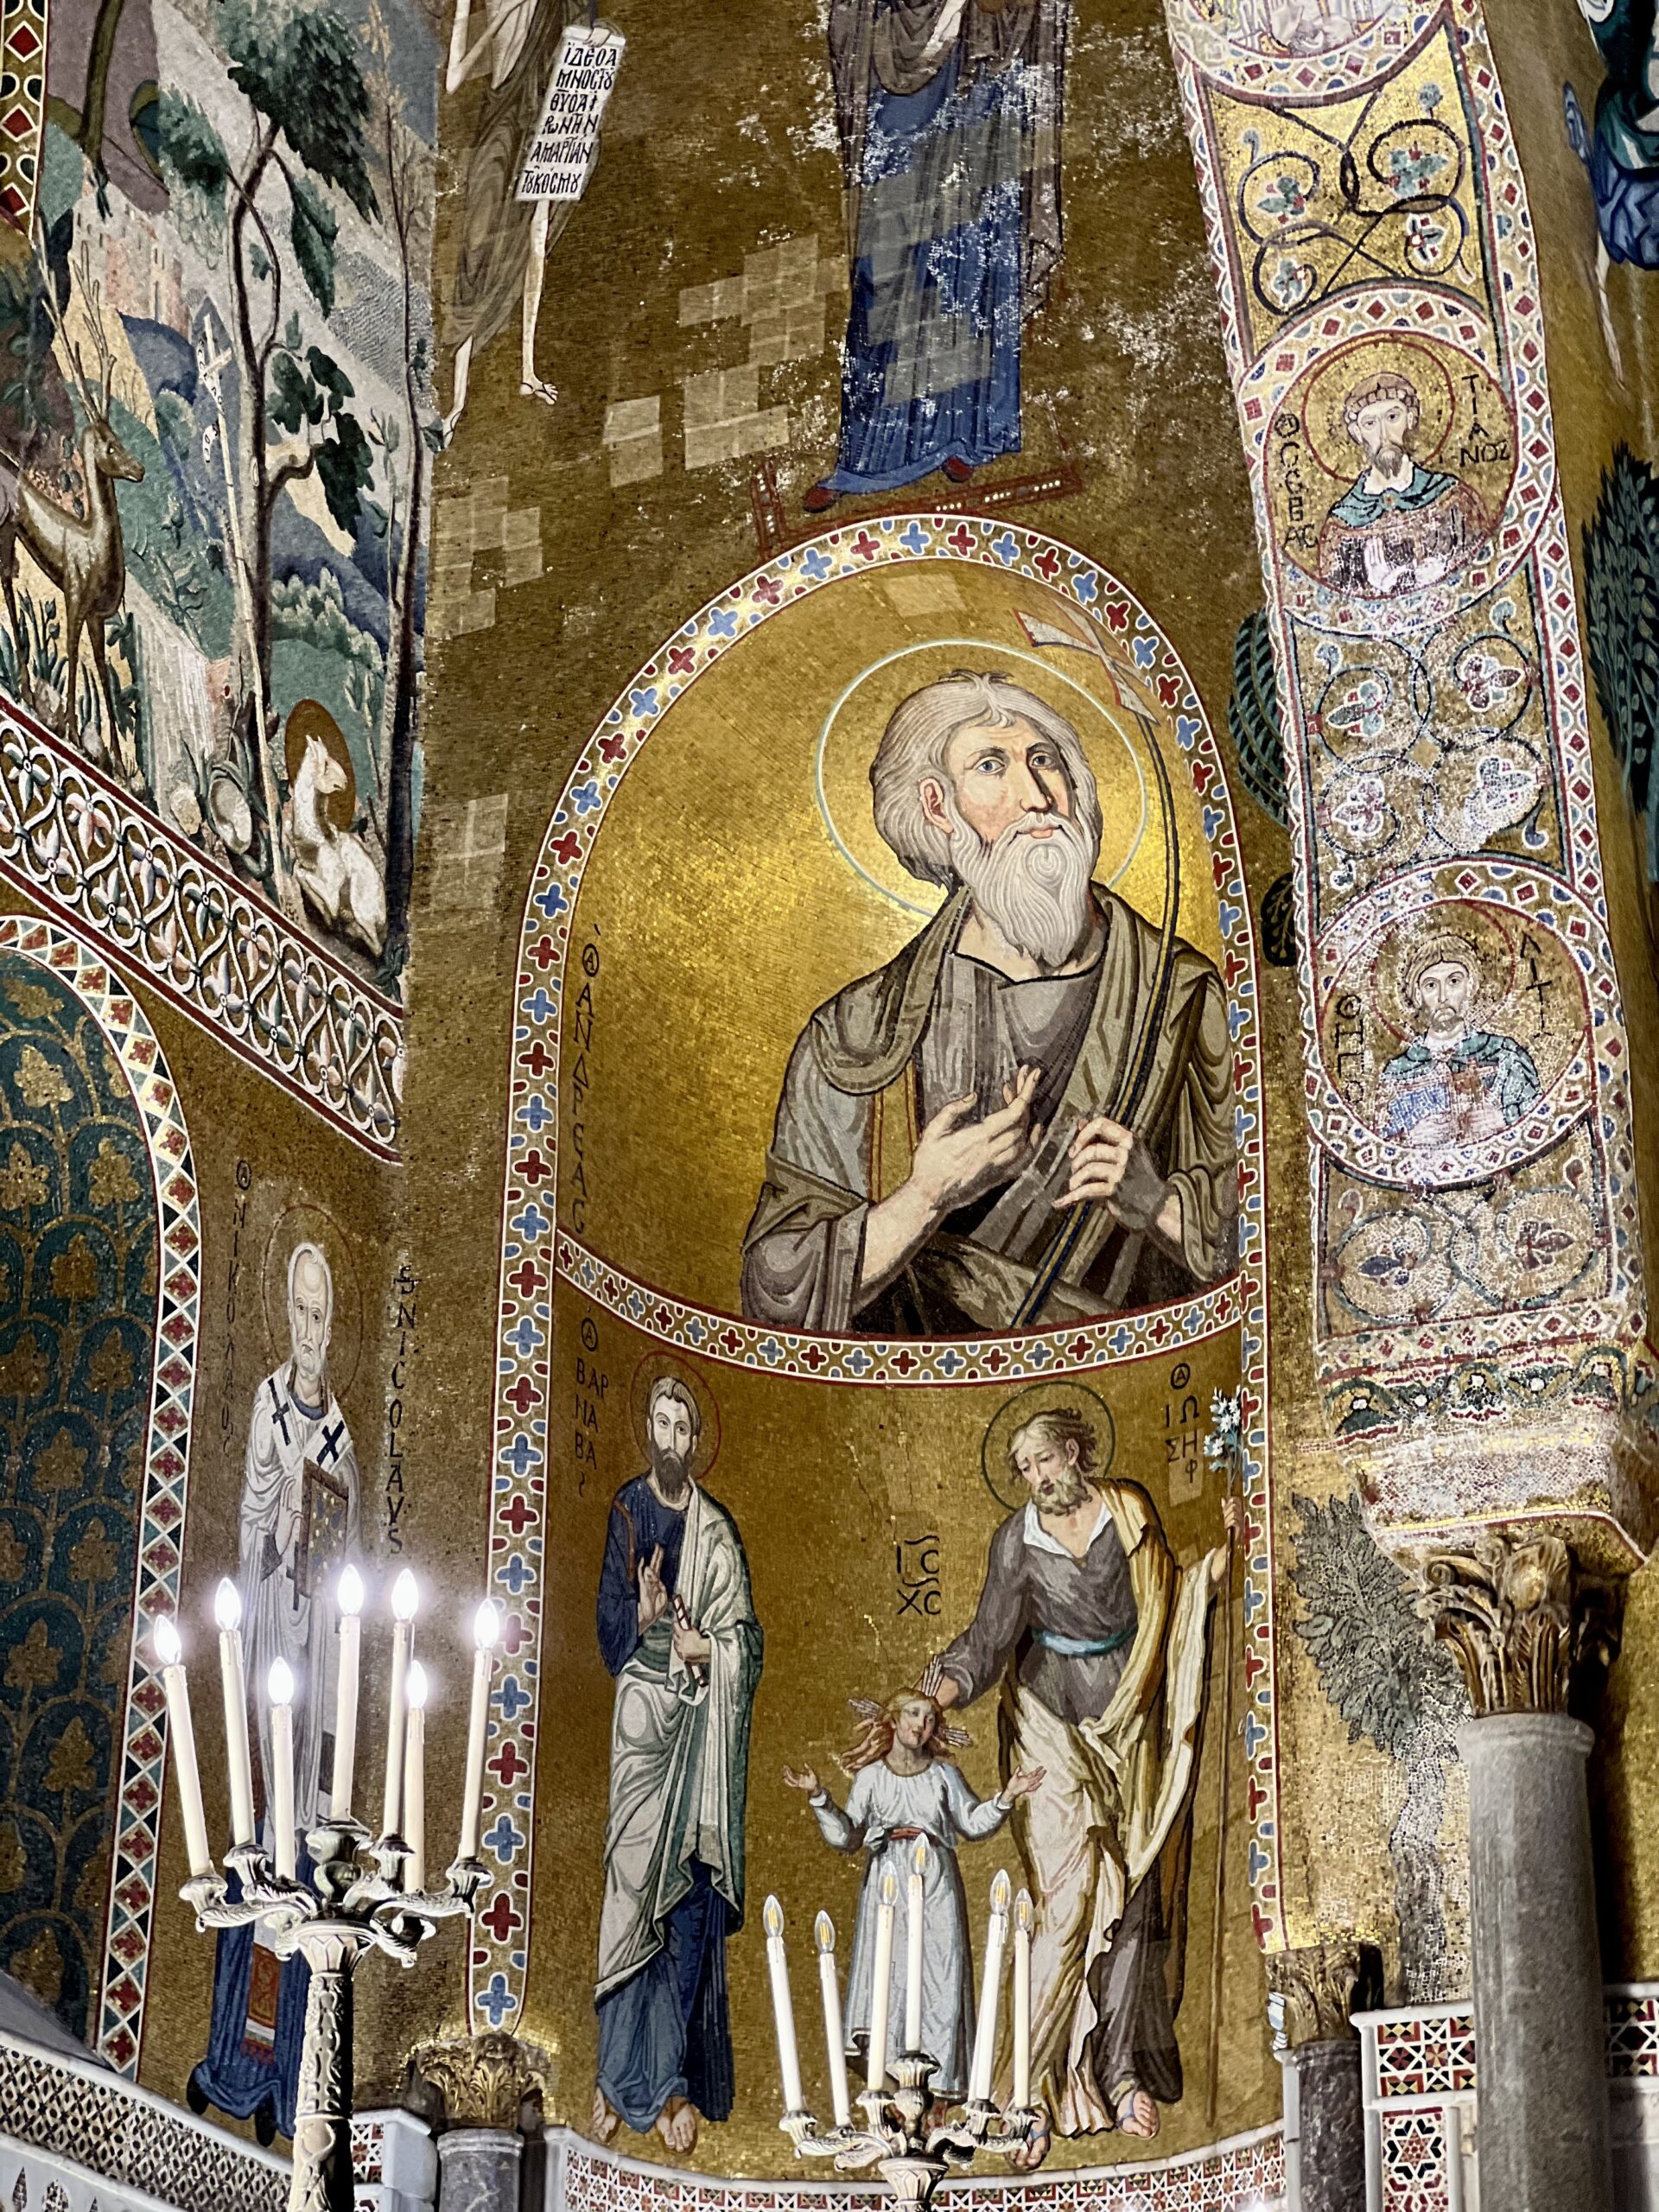 moaics in the Palatine Chapel